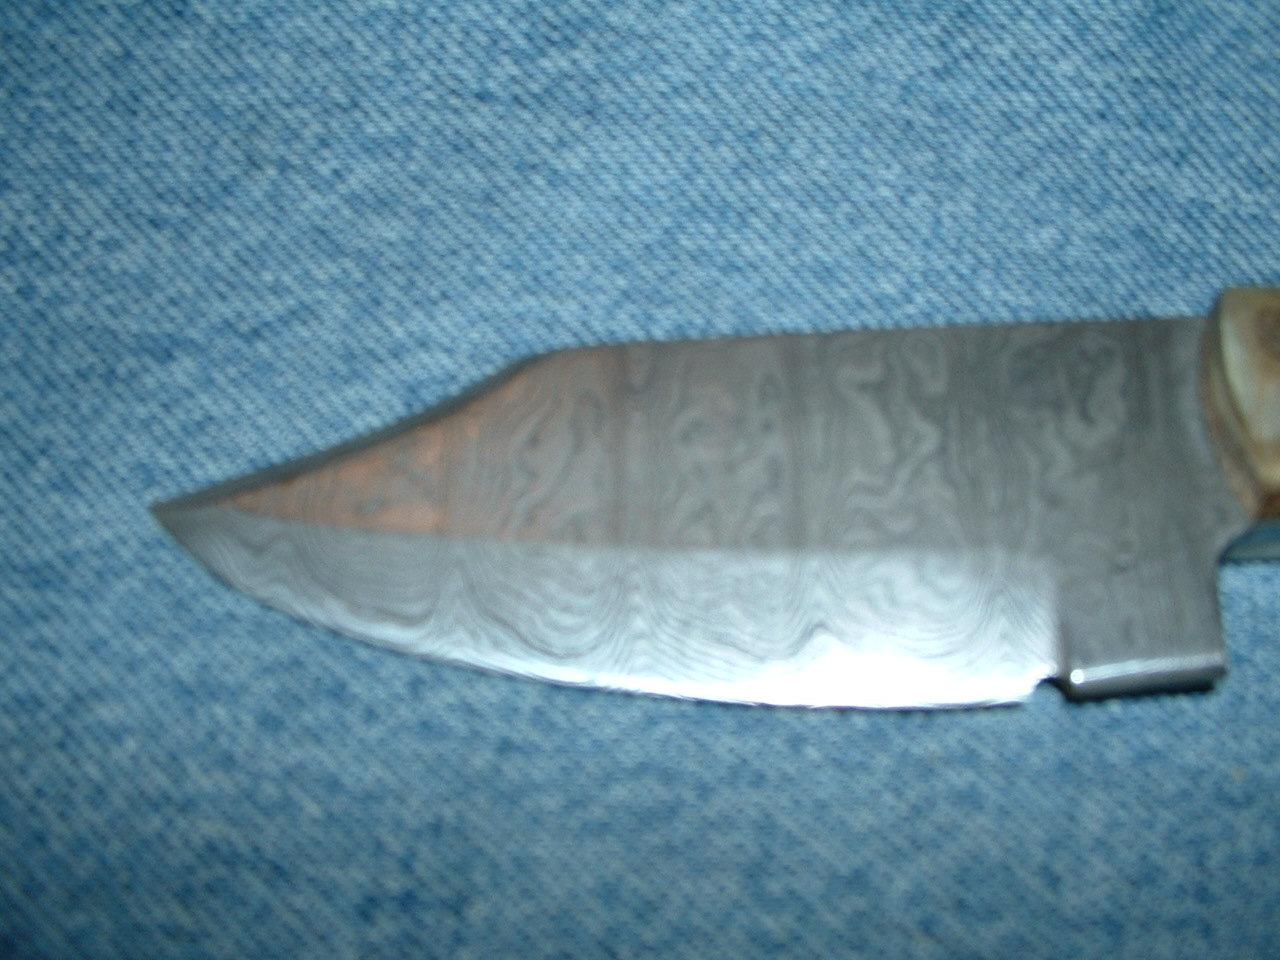 damascus knife